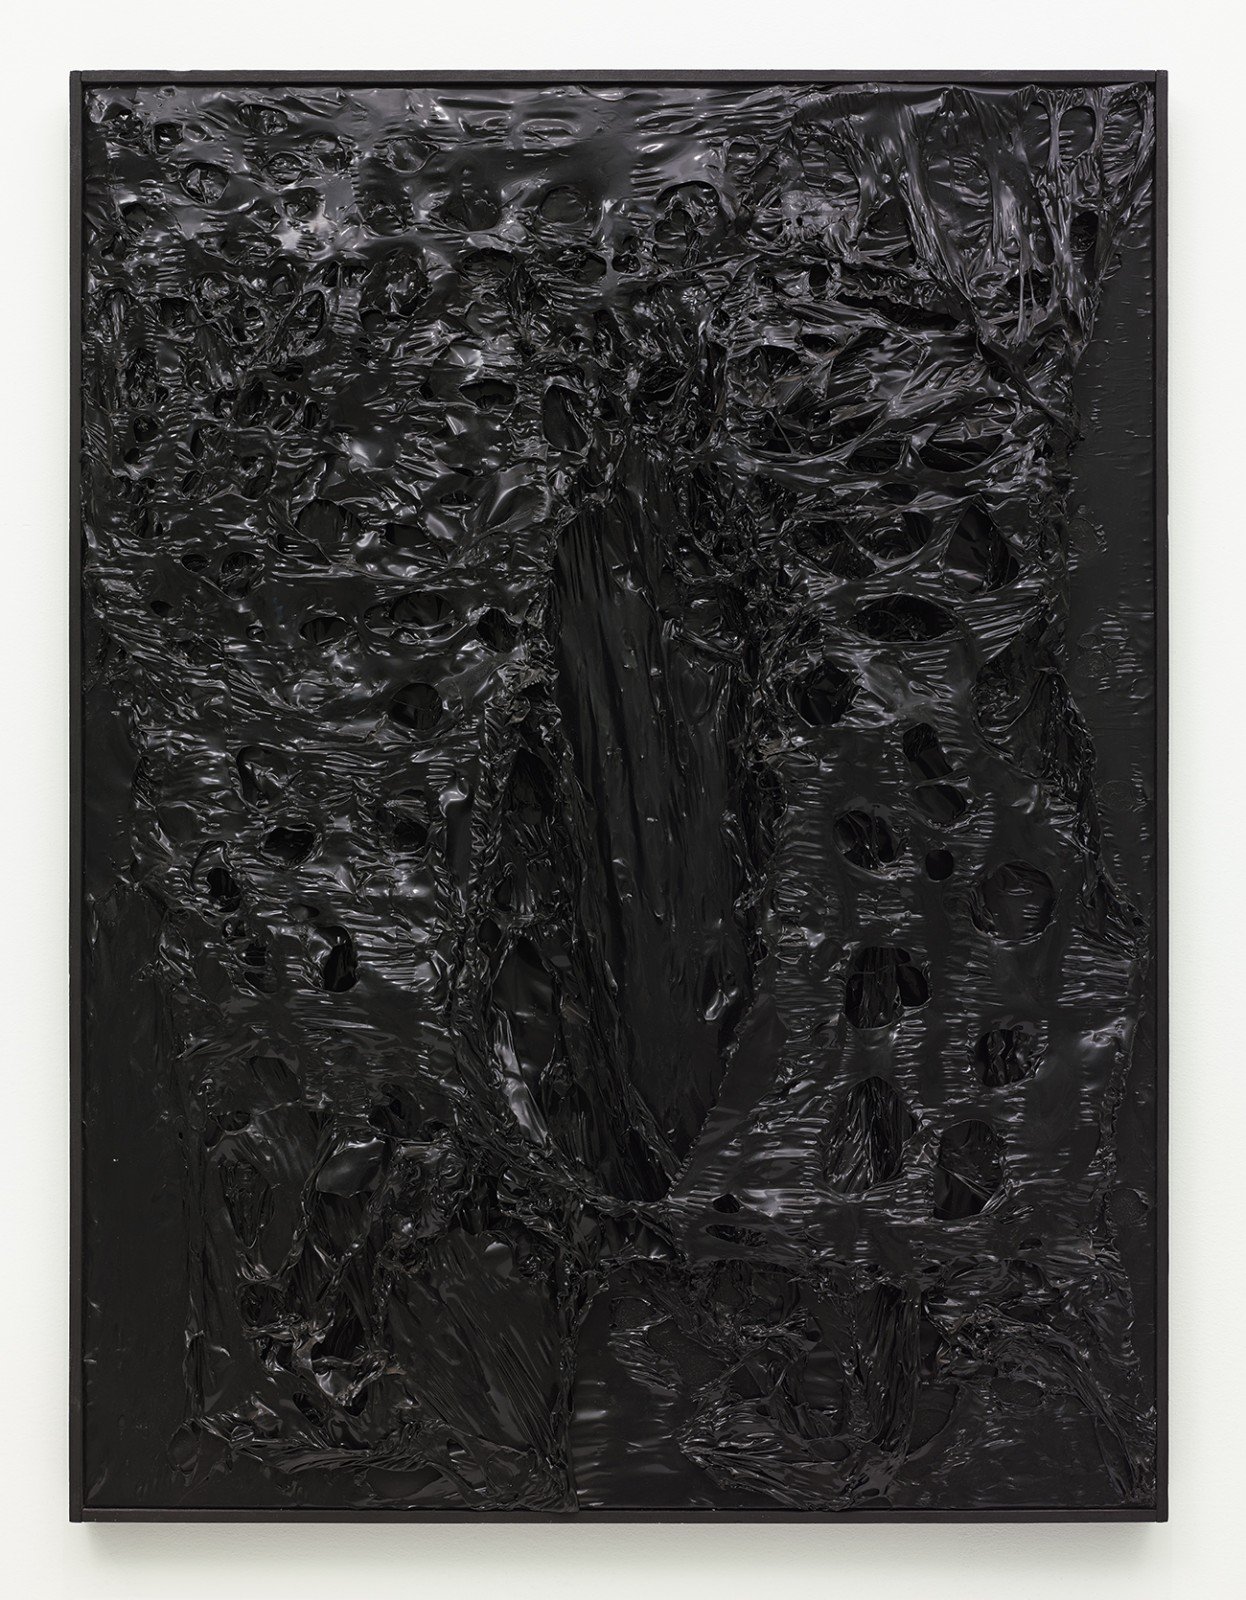 Alberto Burri, Combustione, 1964. Plastic, vinyl, acrylic burnt on board, 22 x 14 inches.